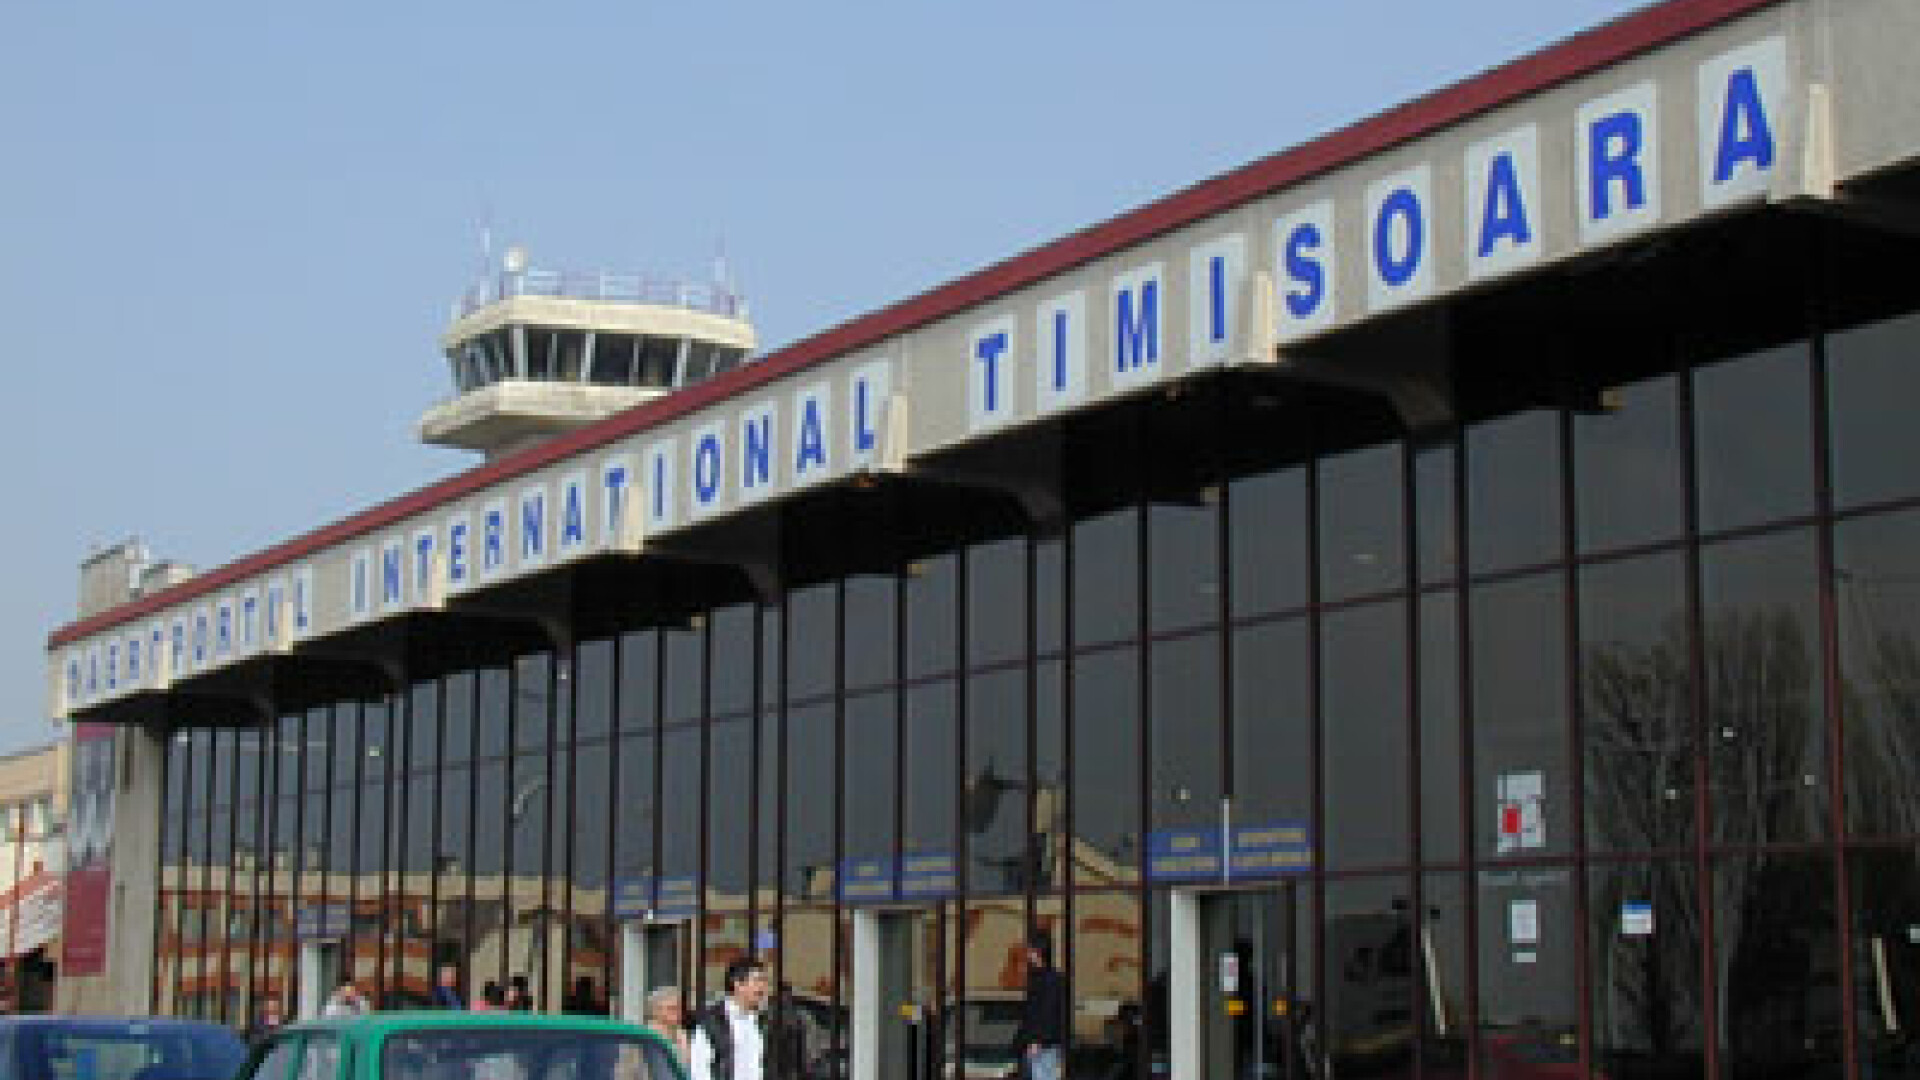 Aeroportul International din Timisoara